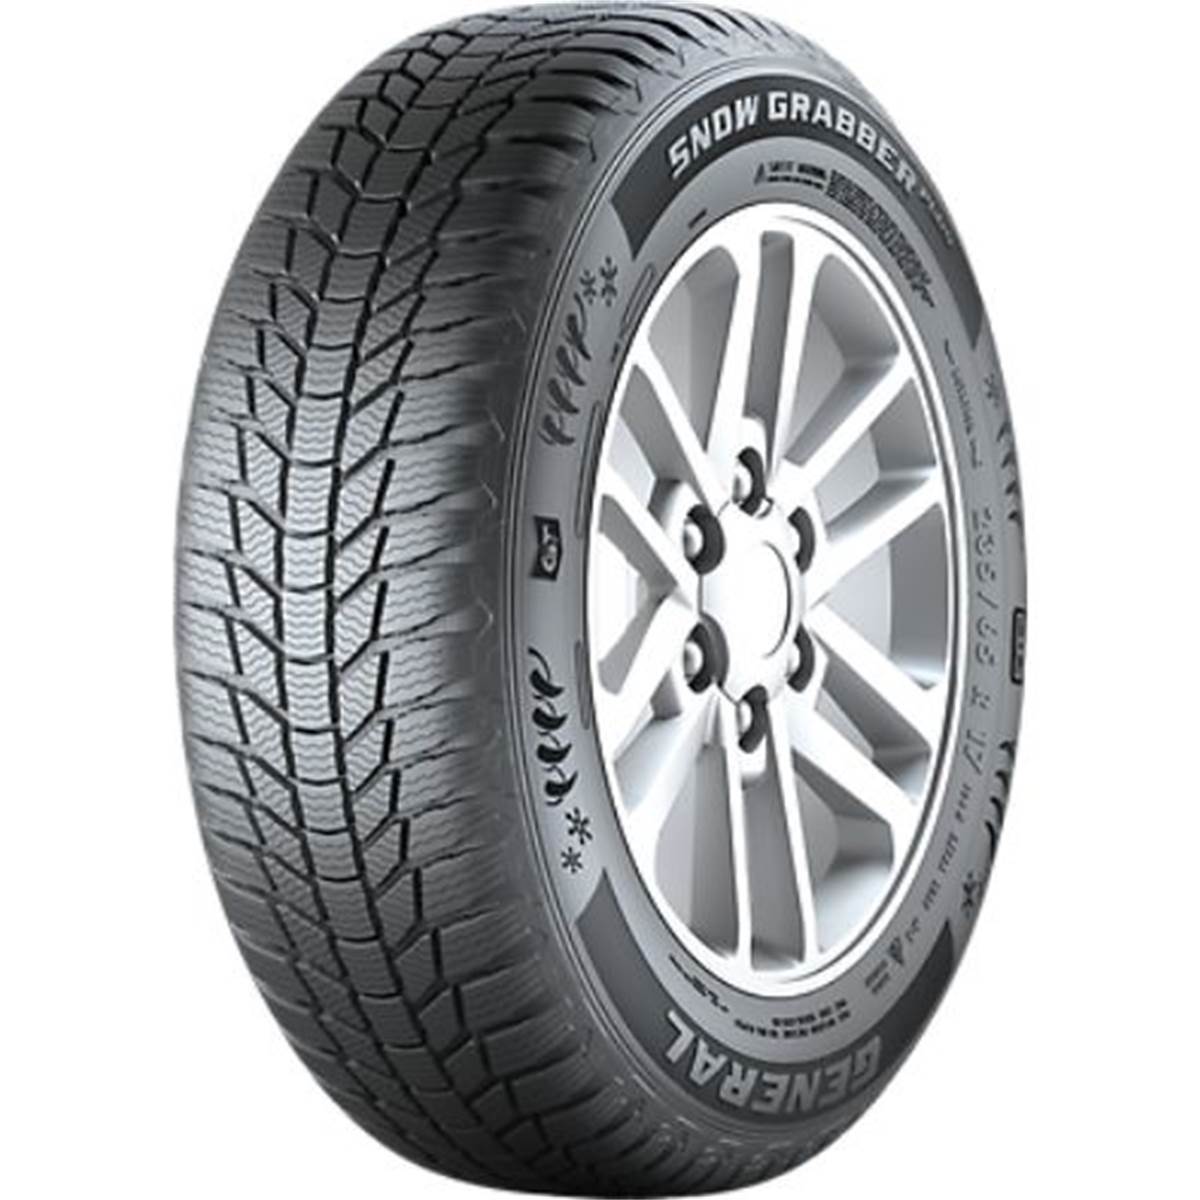 General Tire Neumático  Snow Grabber Plus 225/65R17 106H